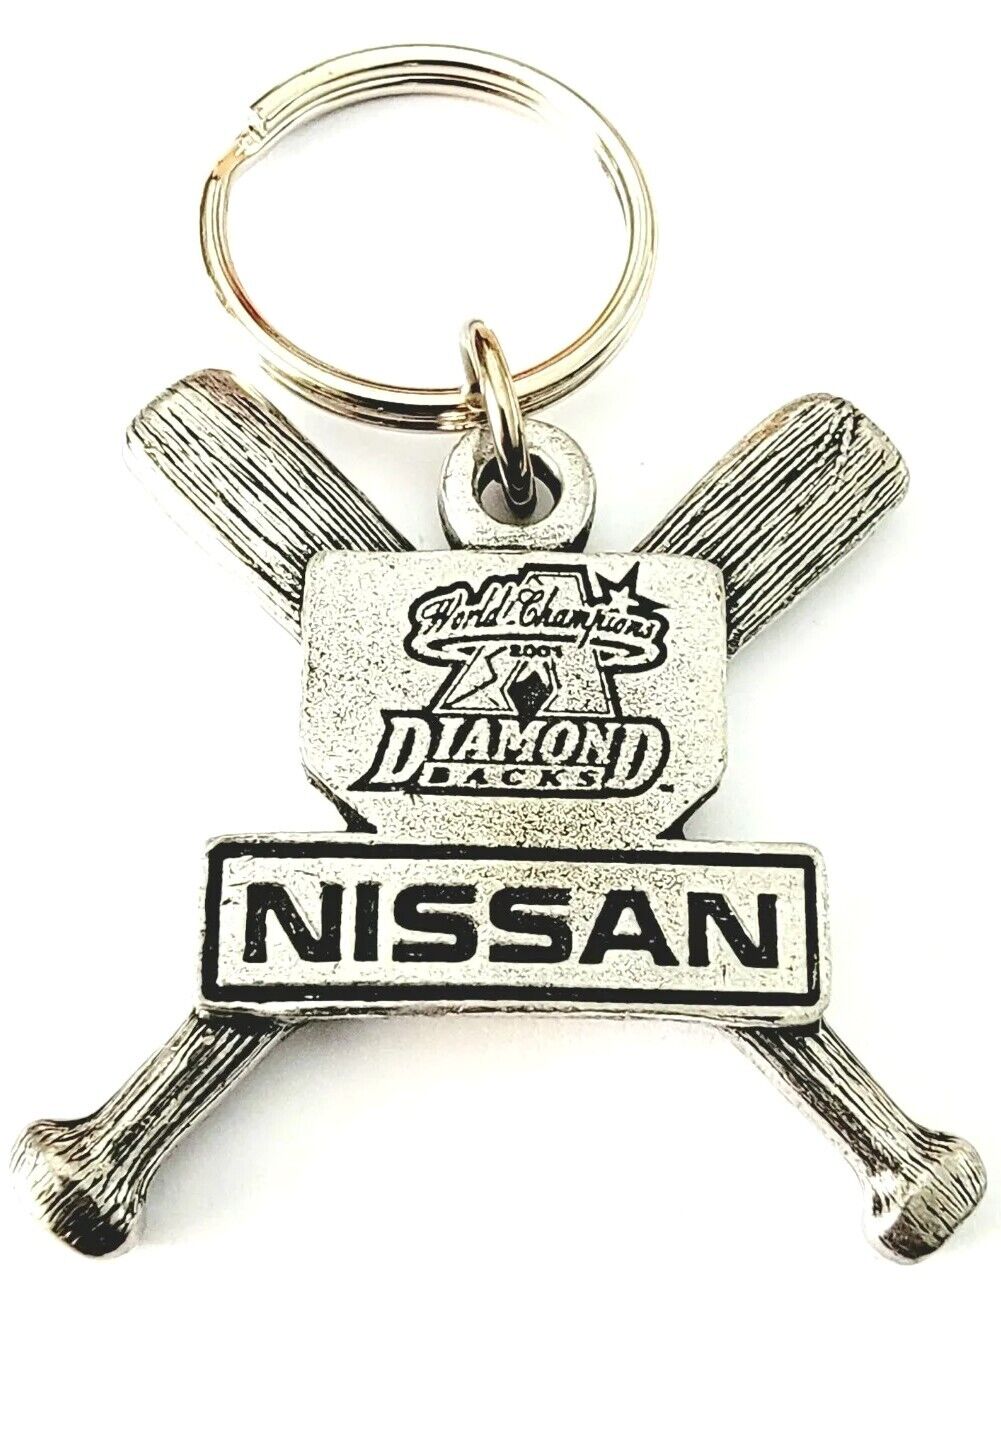 Arizona Diamondbacks Nissan Keychain 2001 World Champions Keyring Souvenir Gift 